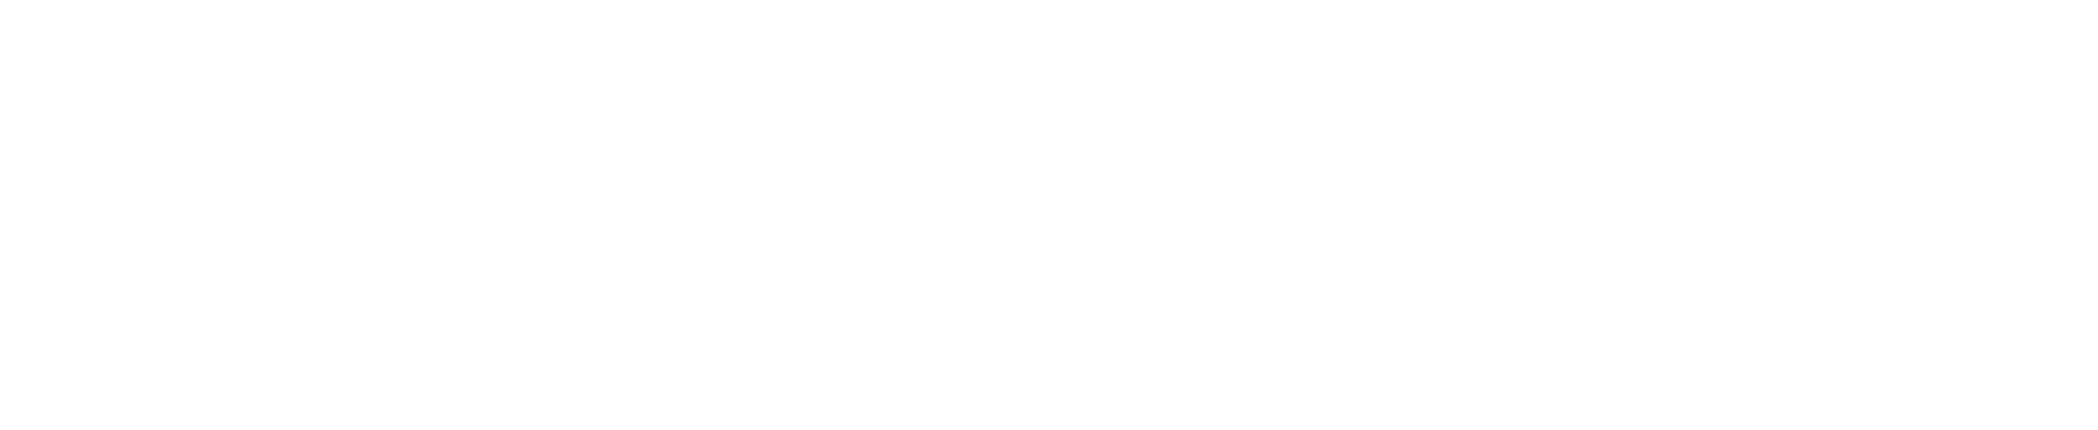 Chad Wilder REALTOR_Logo 2018-03 copy